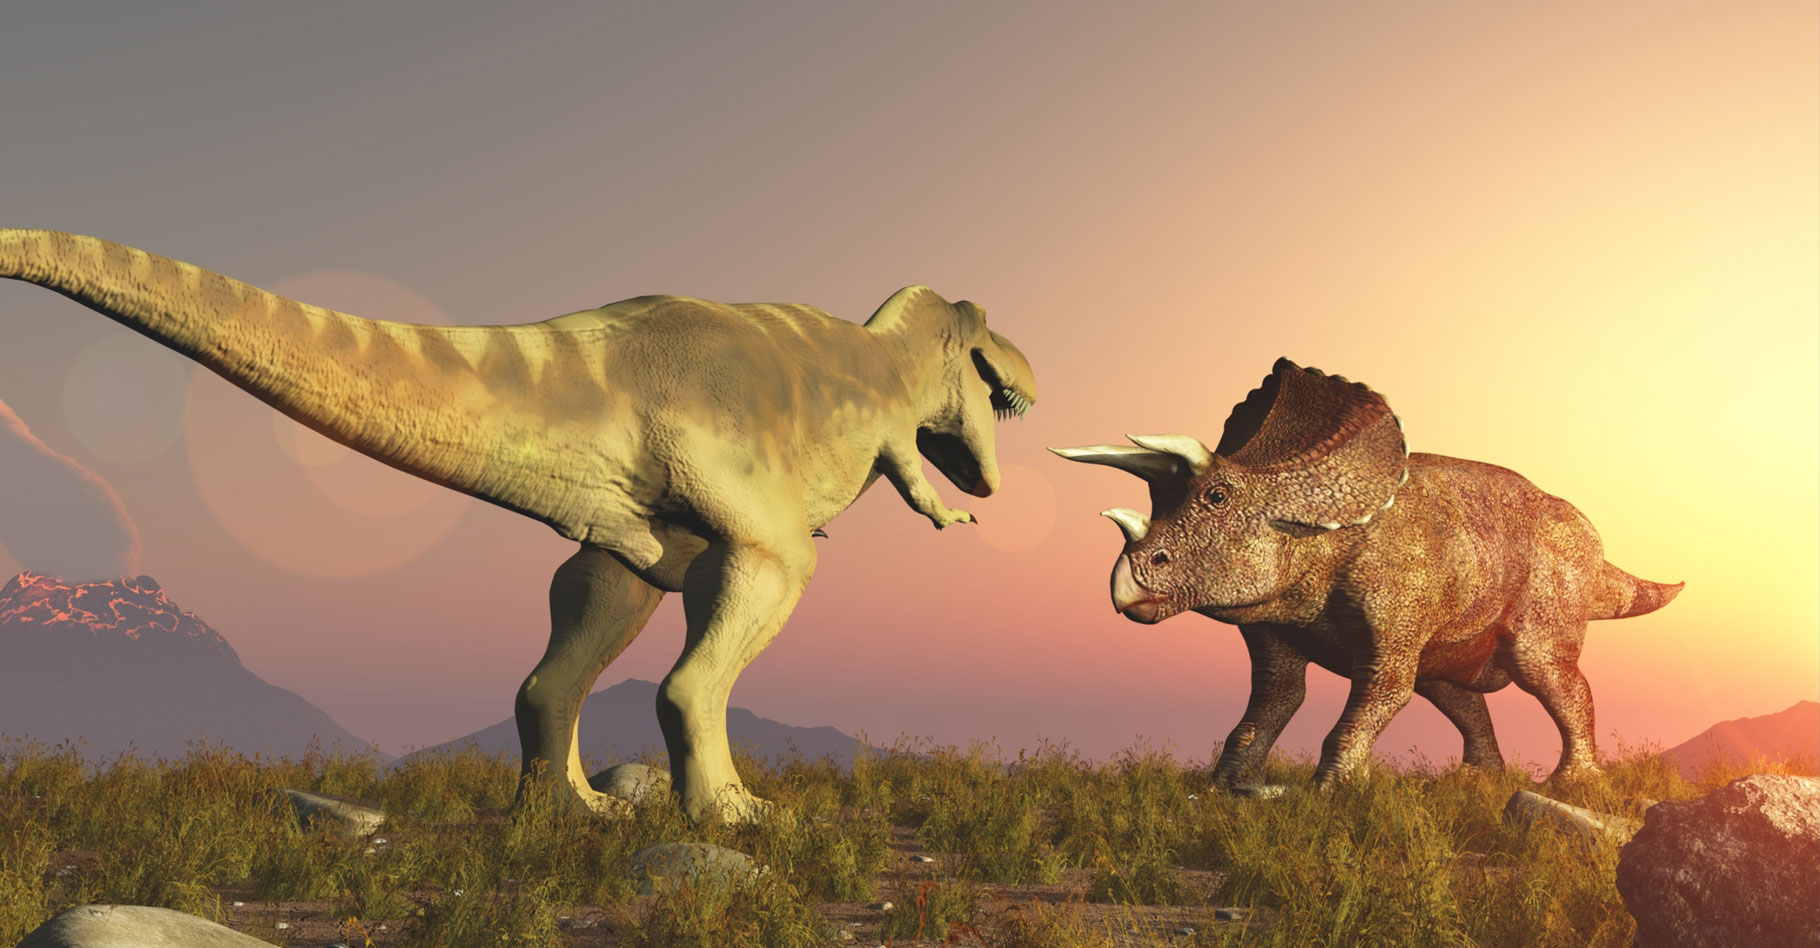 Dinosaures herbivores et carnivores : quel rapport évolutif ?